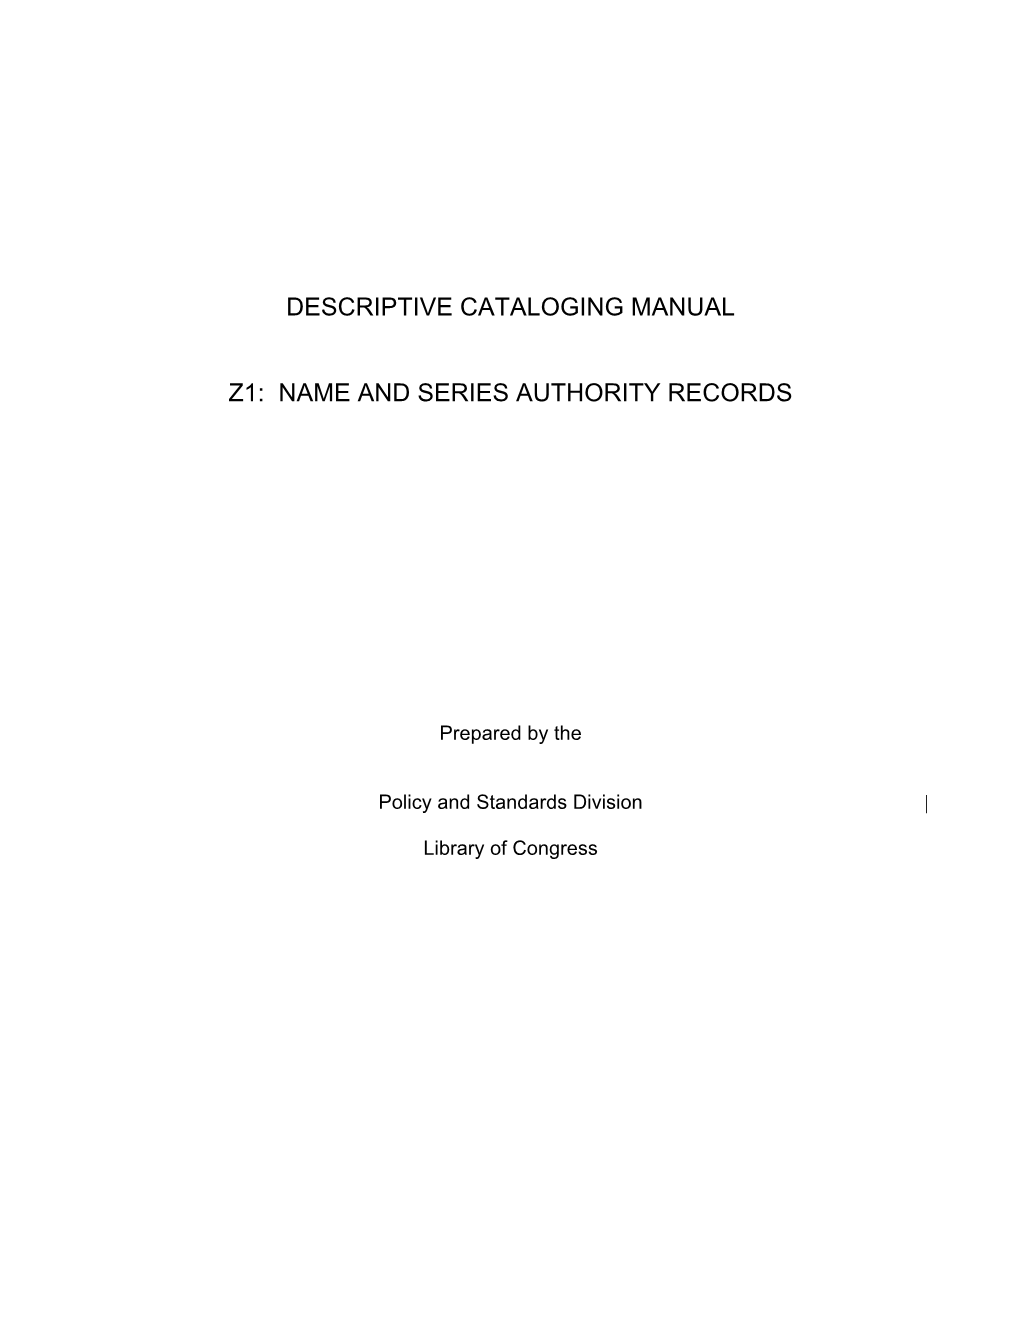 Descriptive Cataloging Manual Z1